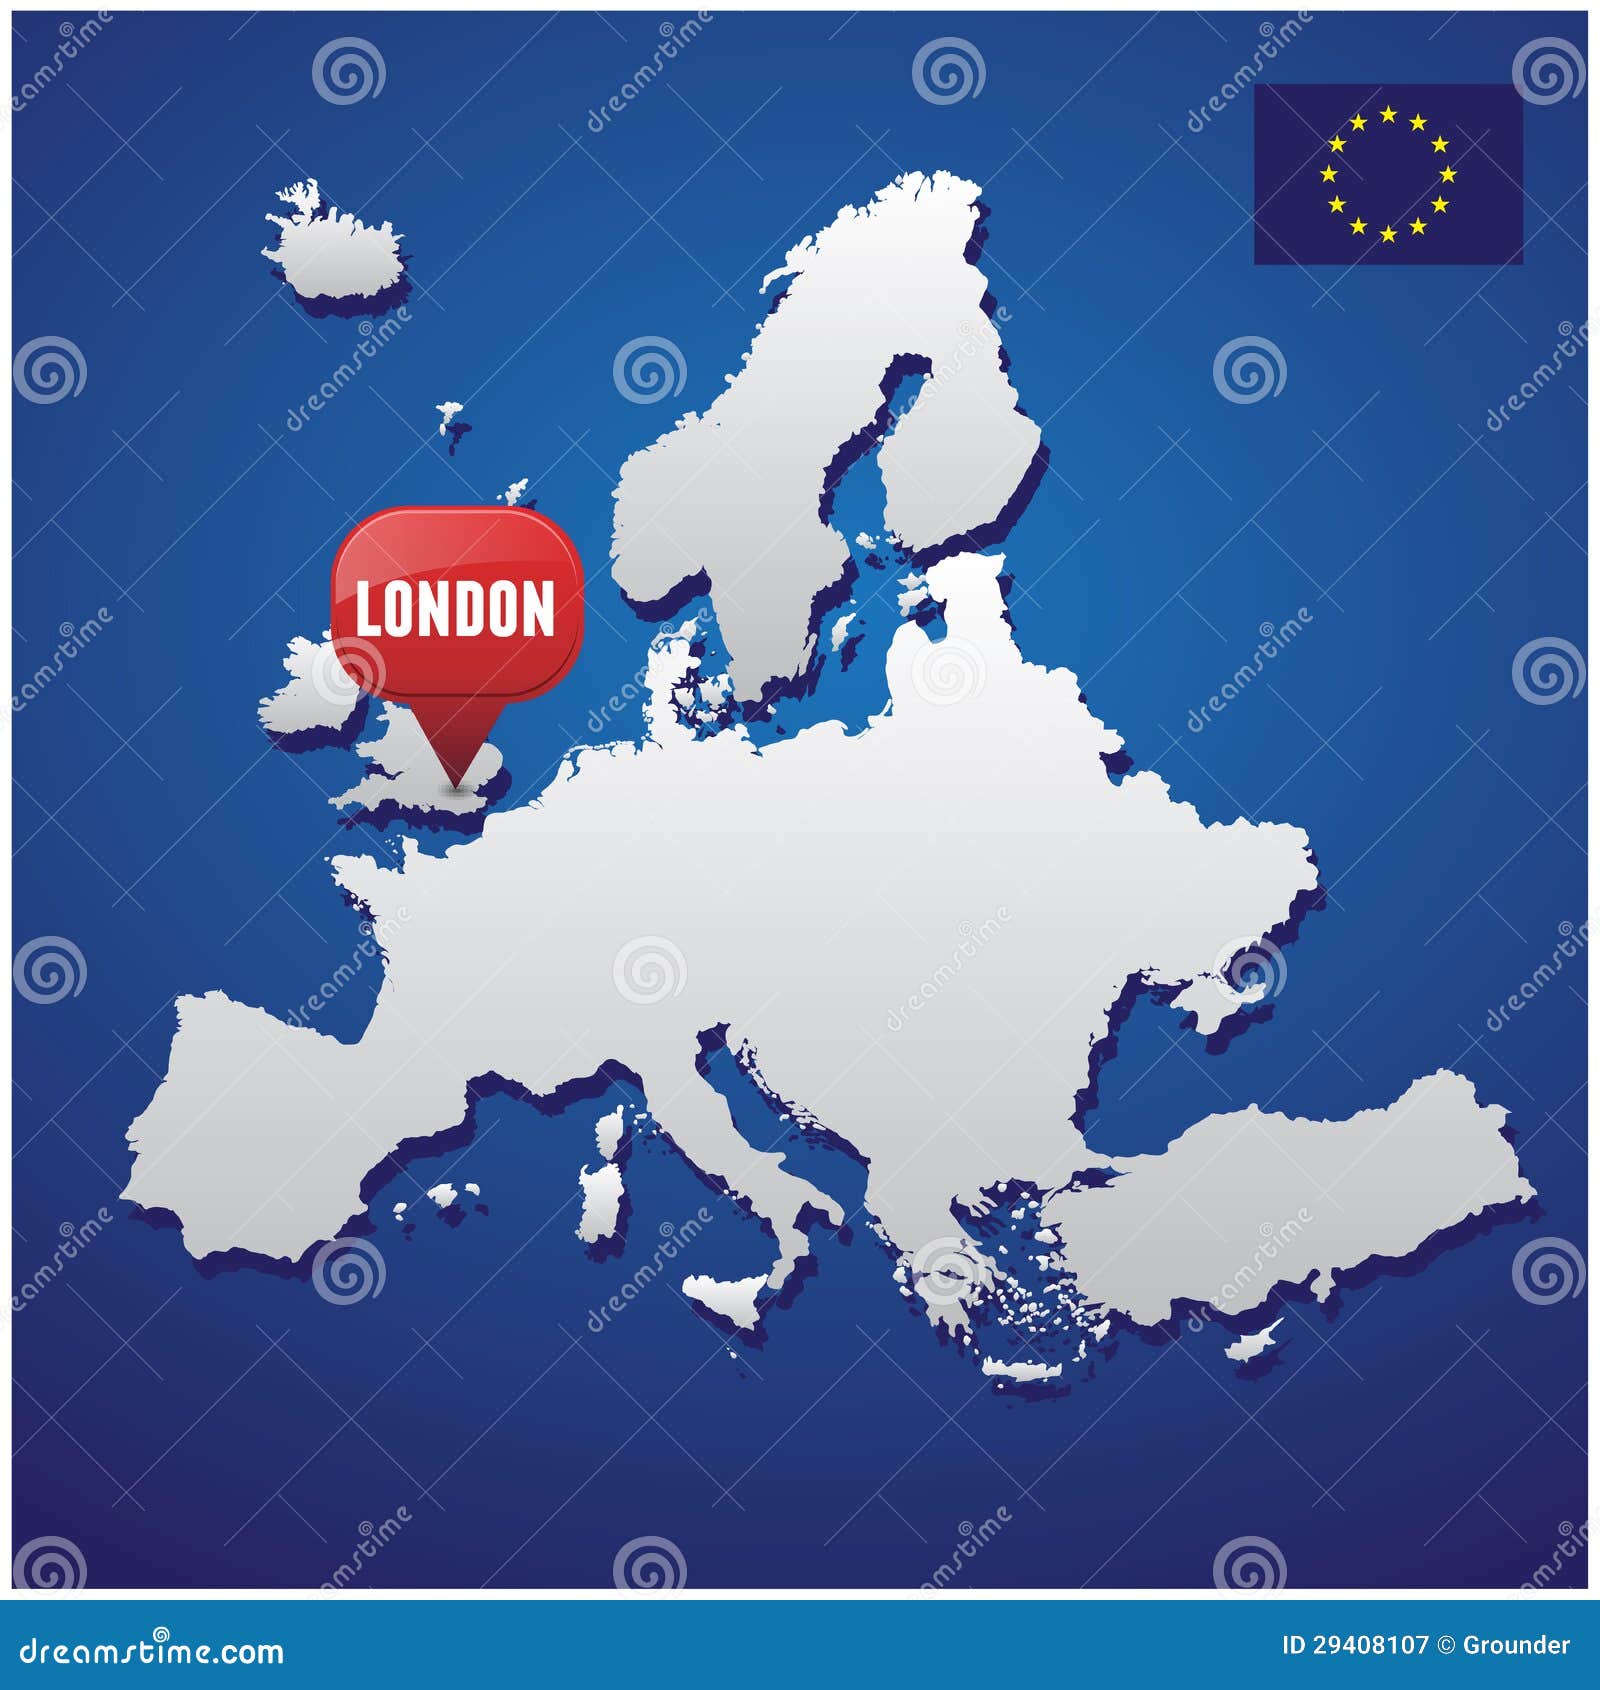 London on european map stock vector. Illustration of abstract - 29408107